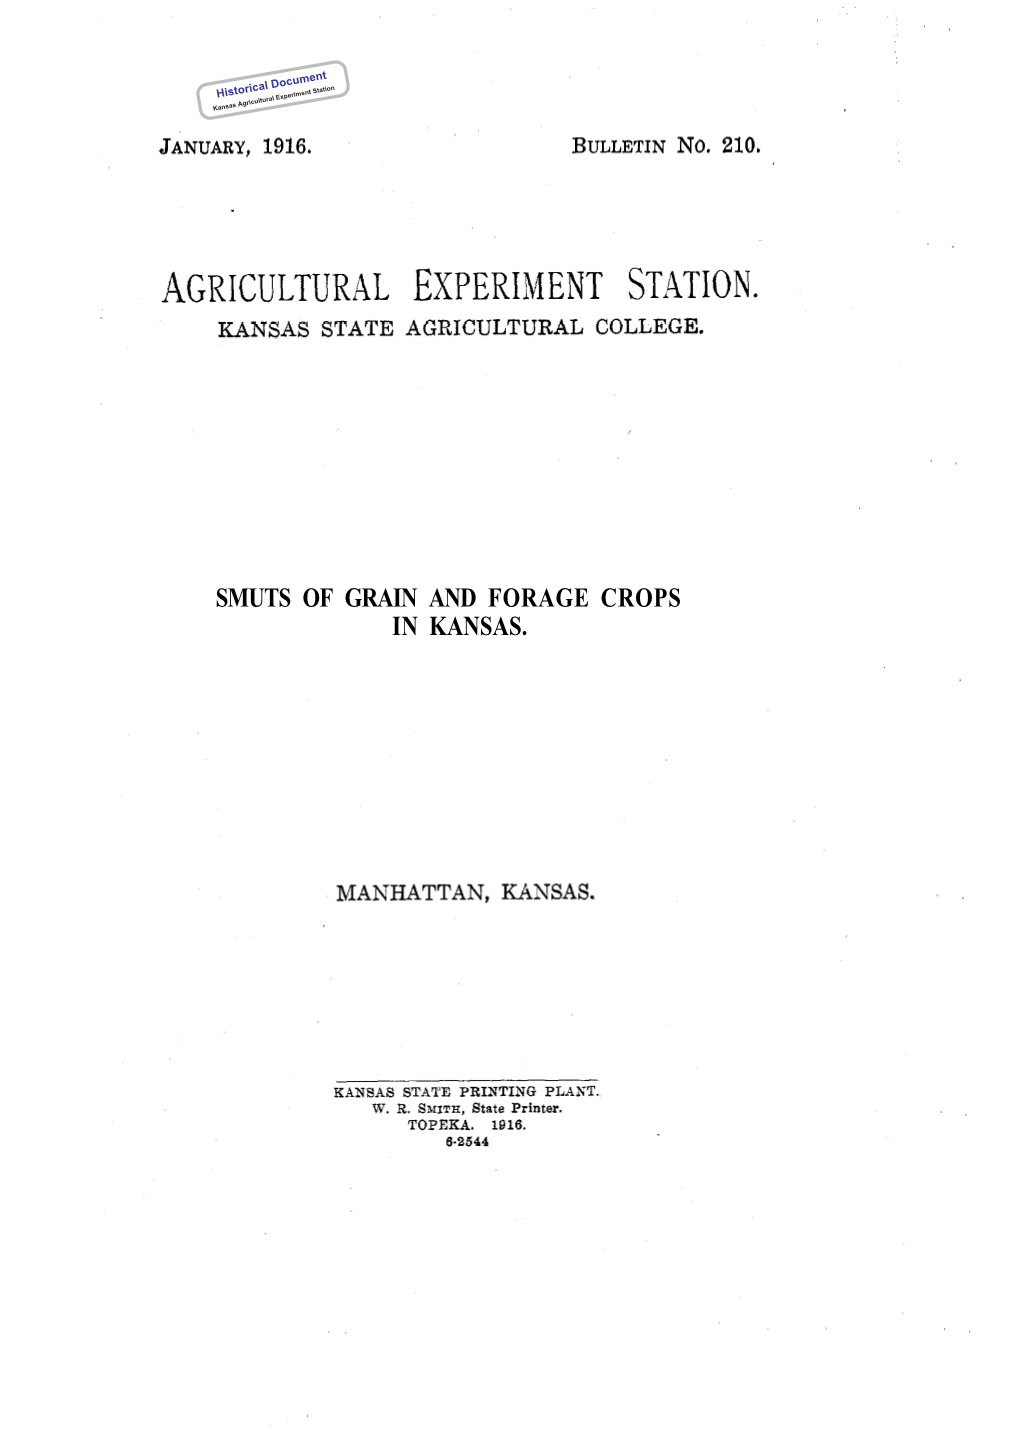 SB210 1916 Smuts of Grain and Forage Crops in Kansas